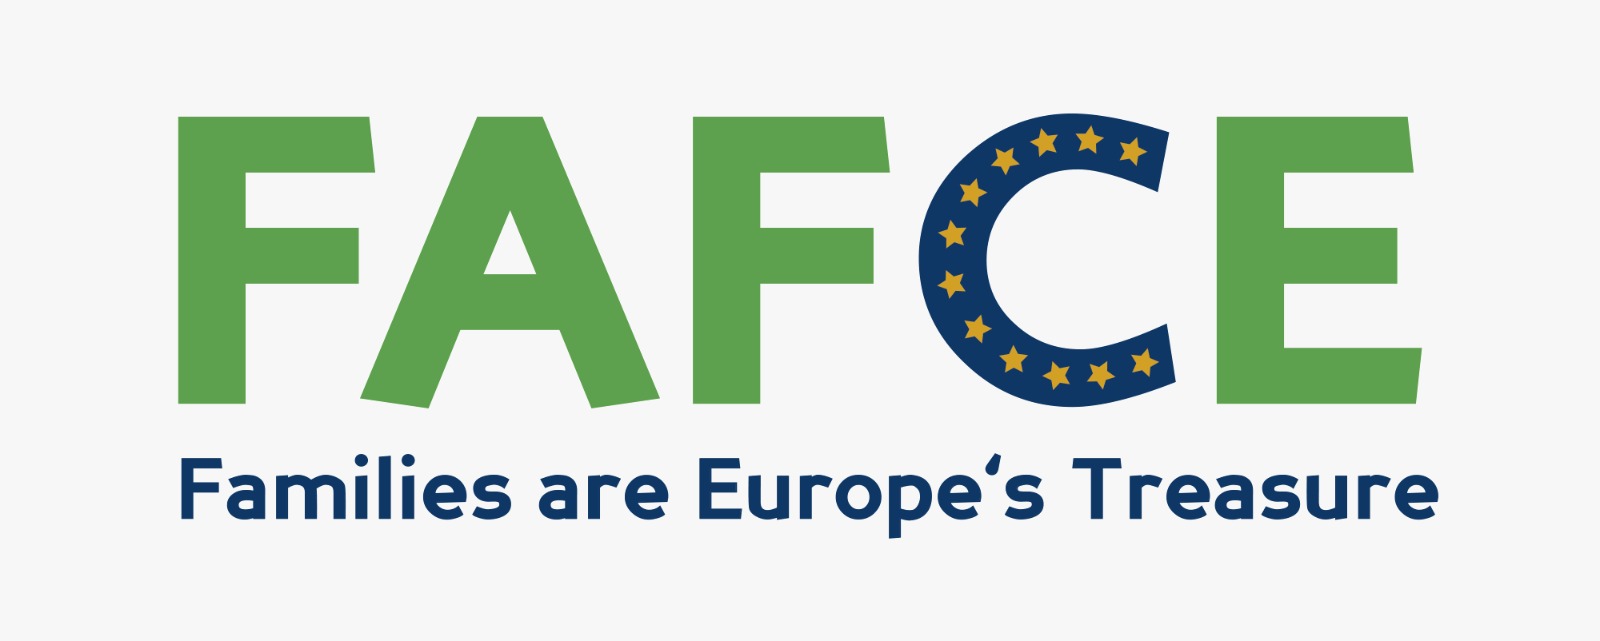 FAFCE Logo